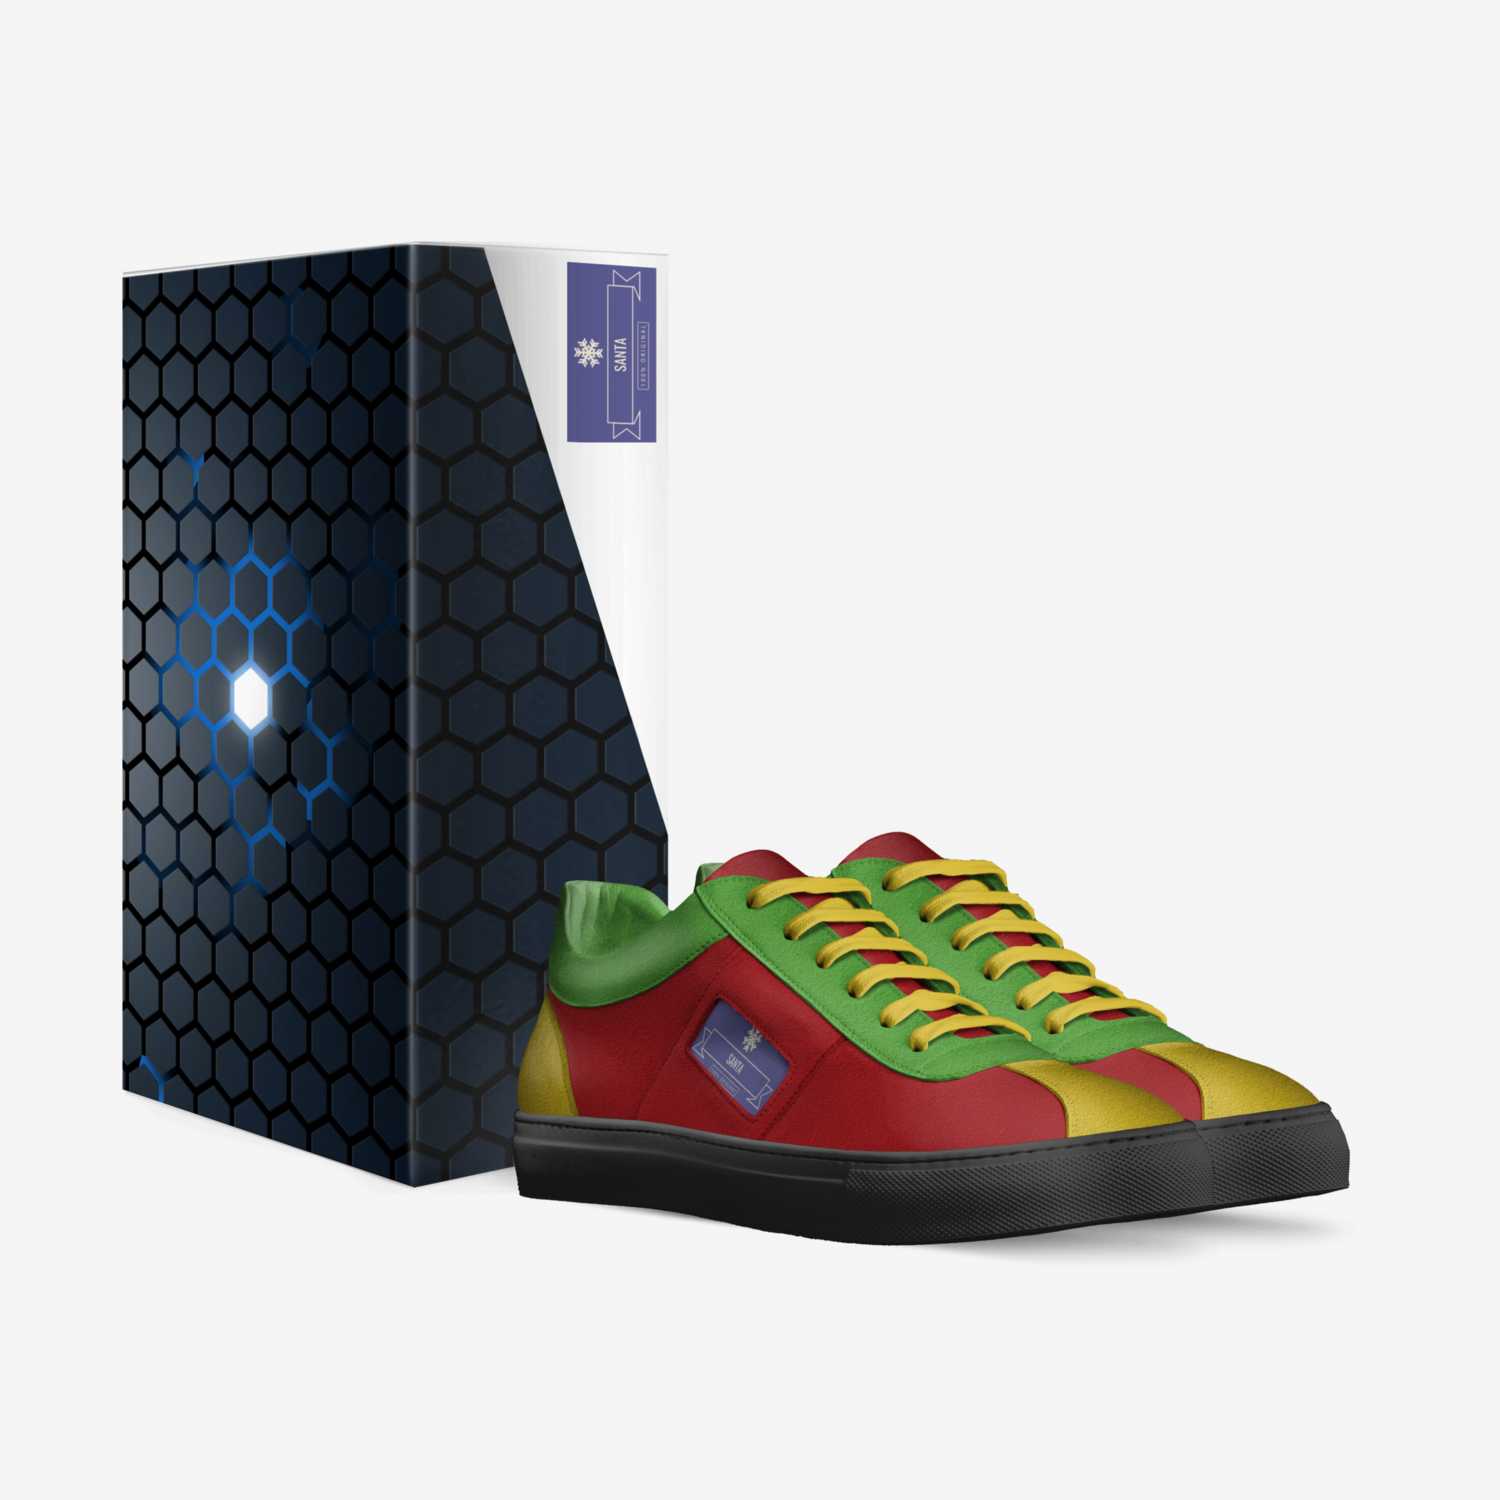 santa custom made in Italy shoes by Grape Soda | Box view